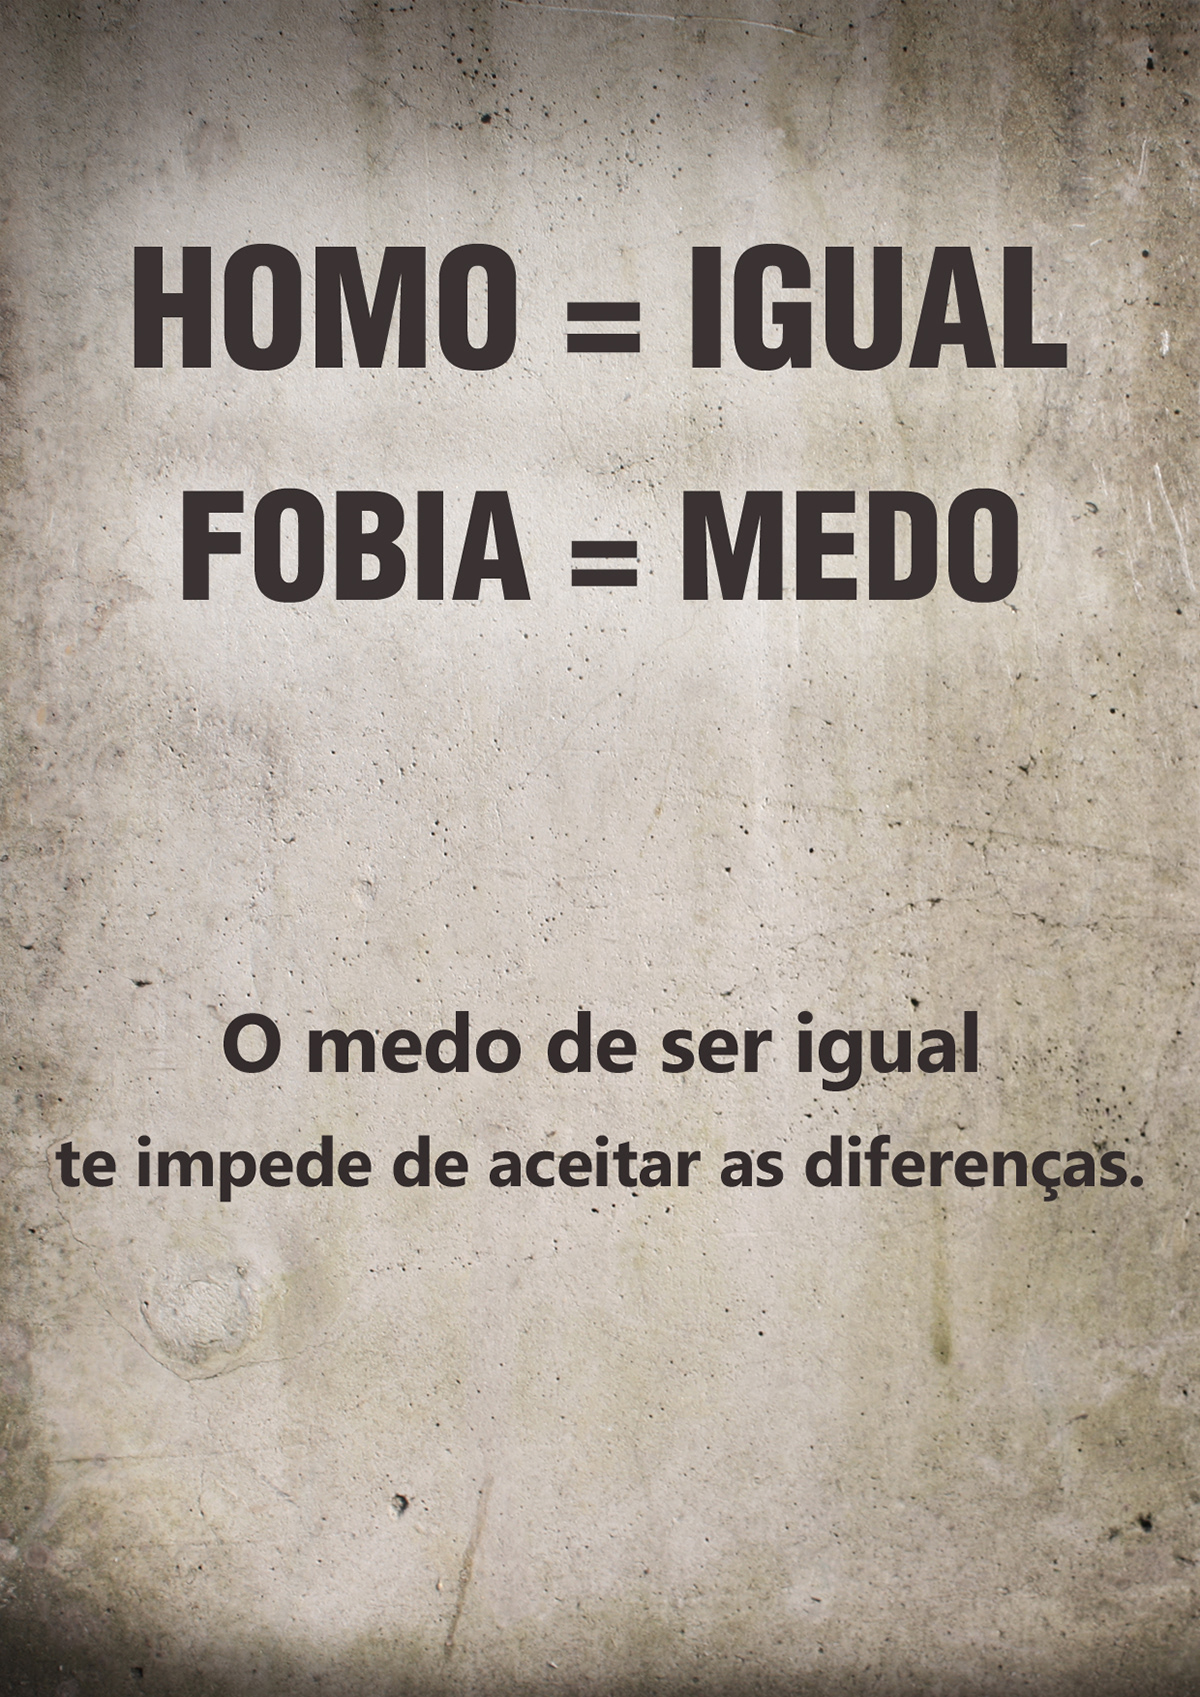 Acadêmico homofobia Propaganda publicidade